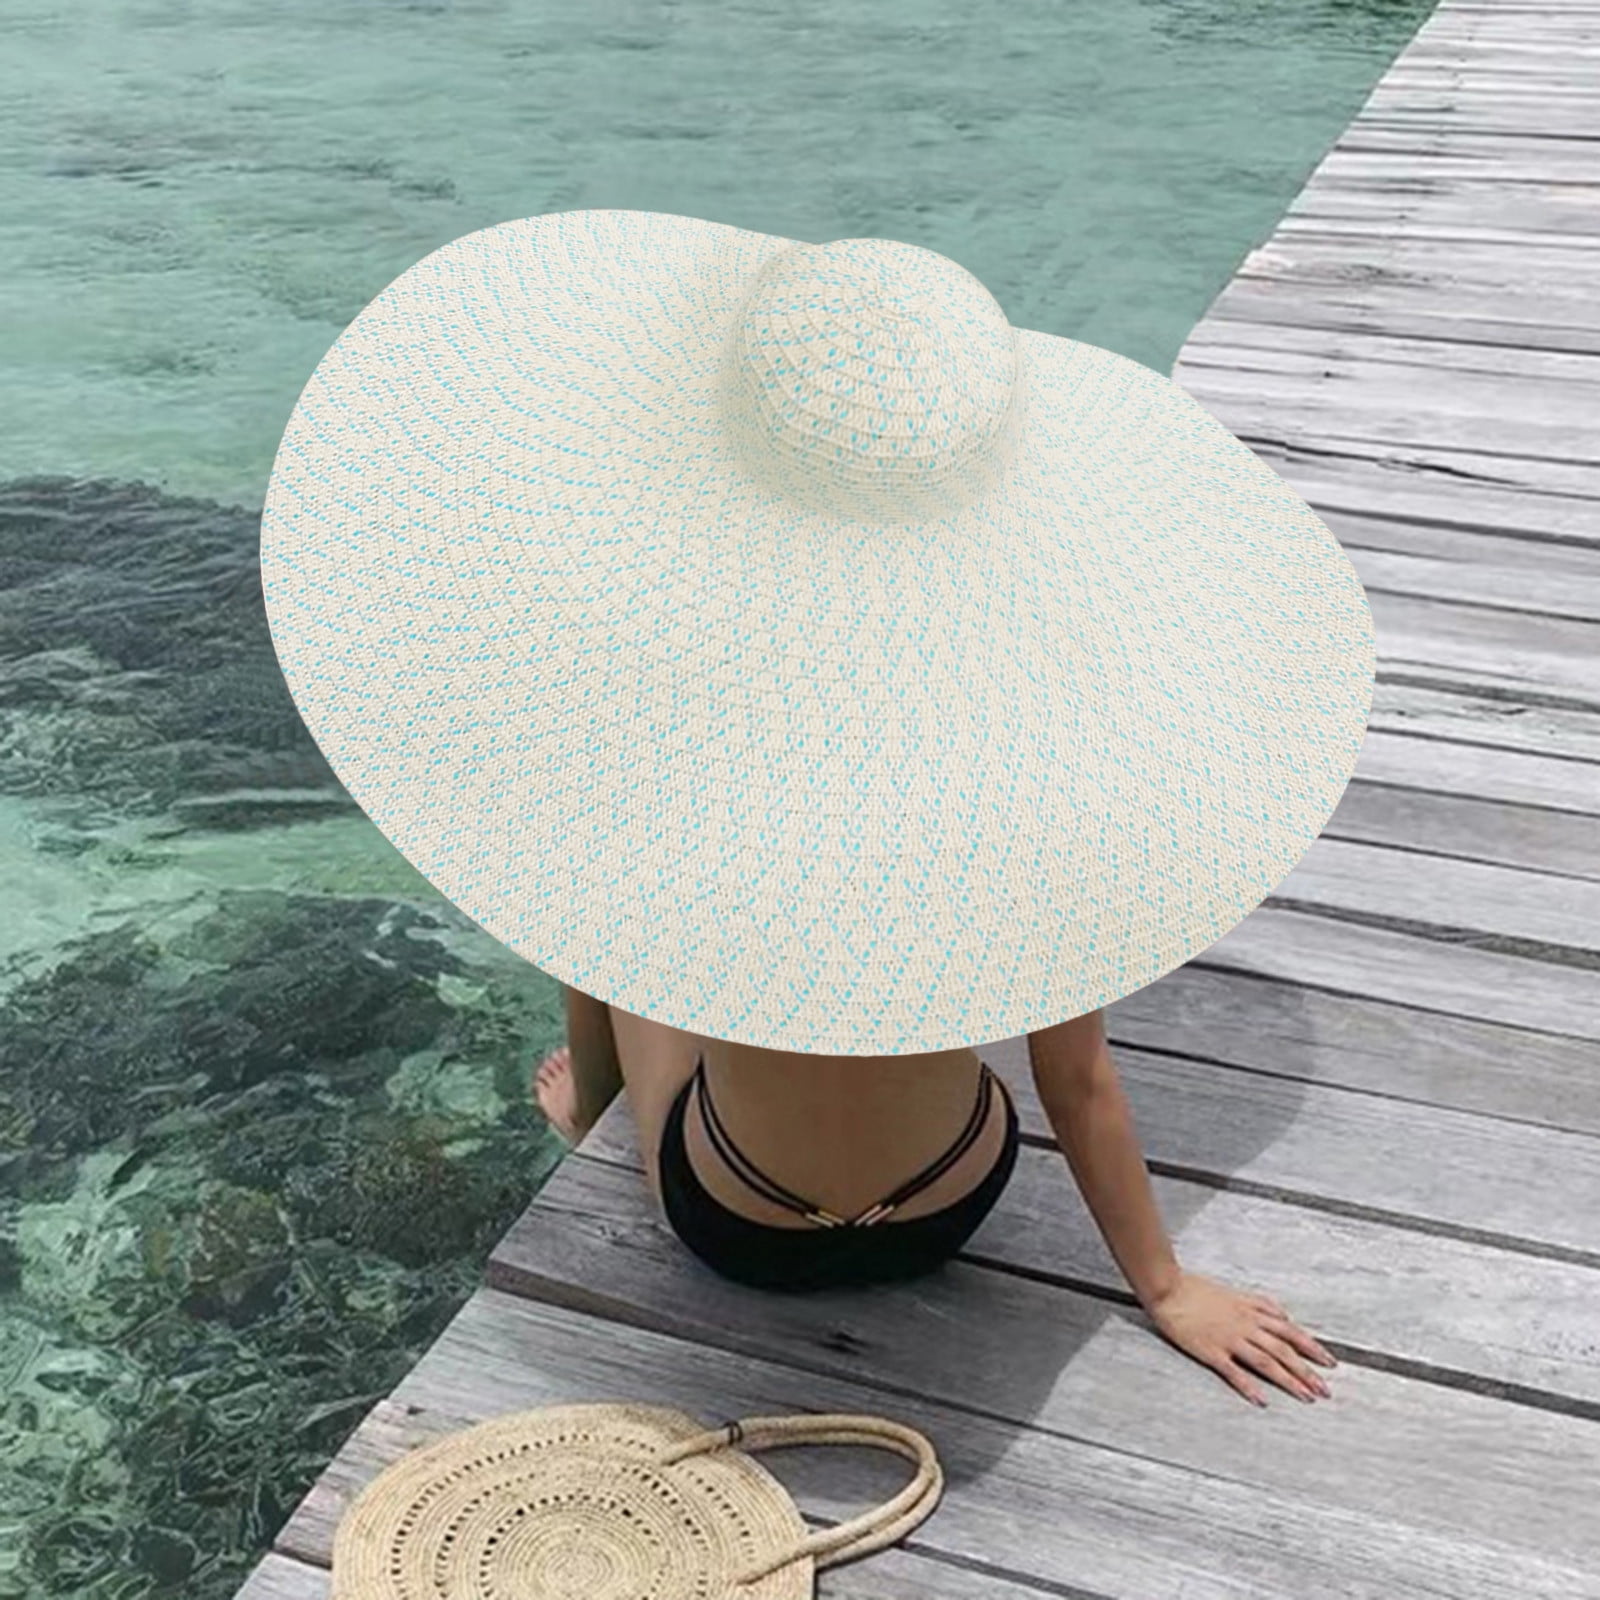 MRULIC baseball cap Fashion Large Sun Hat Beach Anti-UV Sun Protection Cap  Hat Yellow + One size 